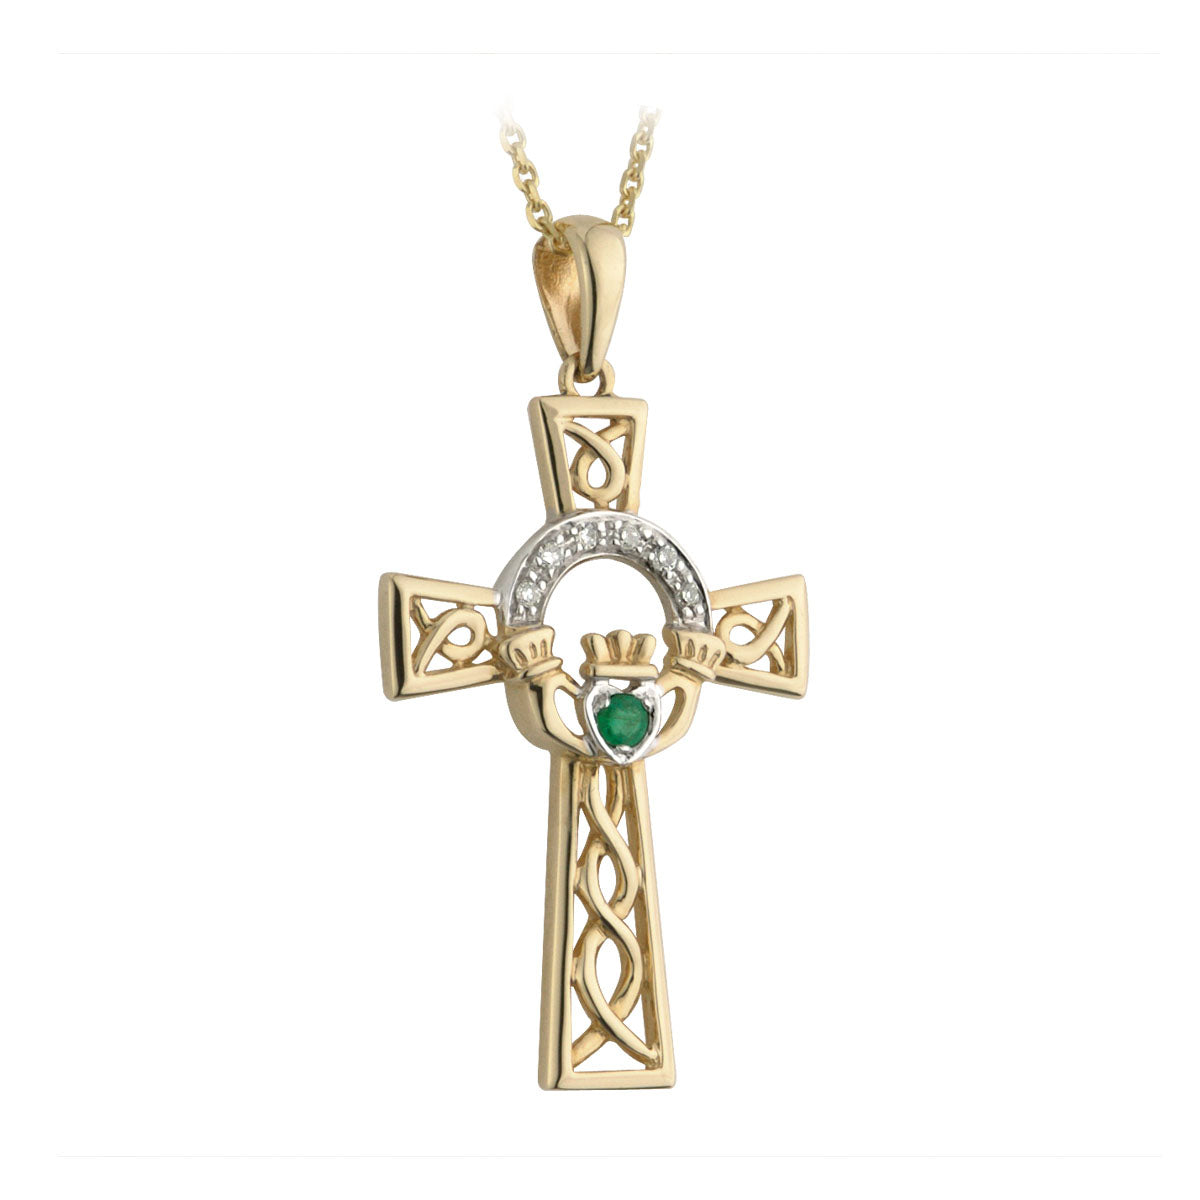 14k gold diamond and emerald claddagh cross pendant s44515 from Solvar